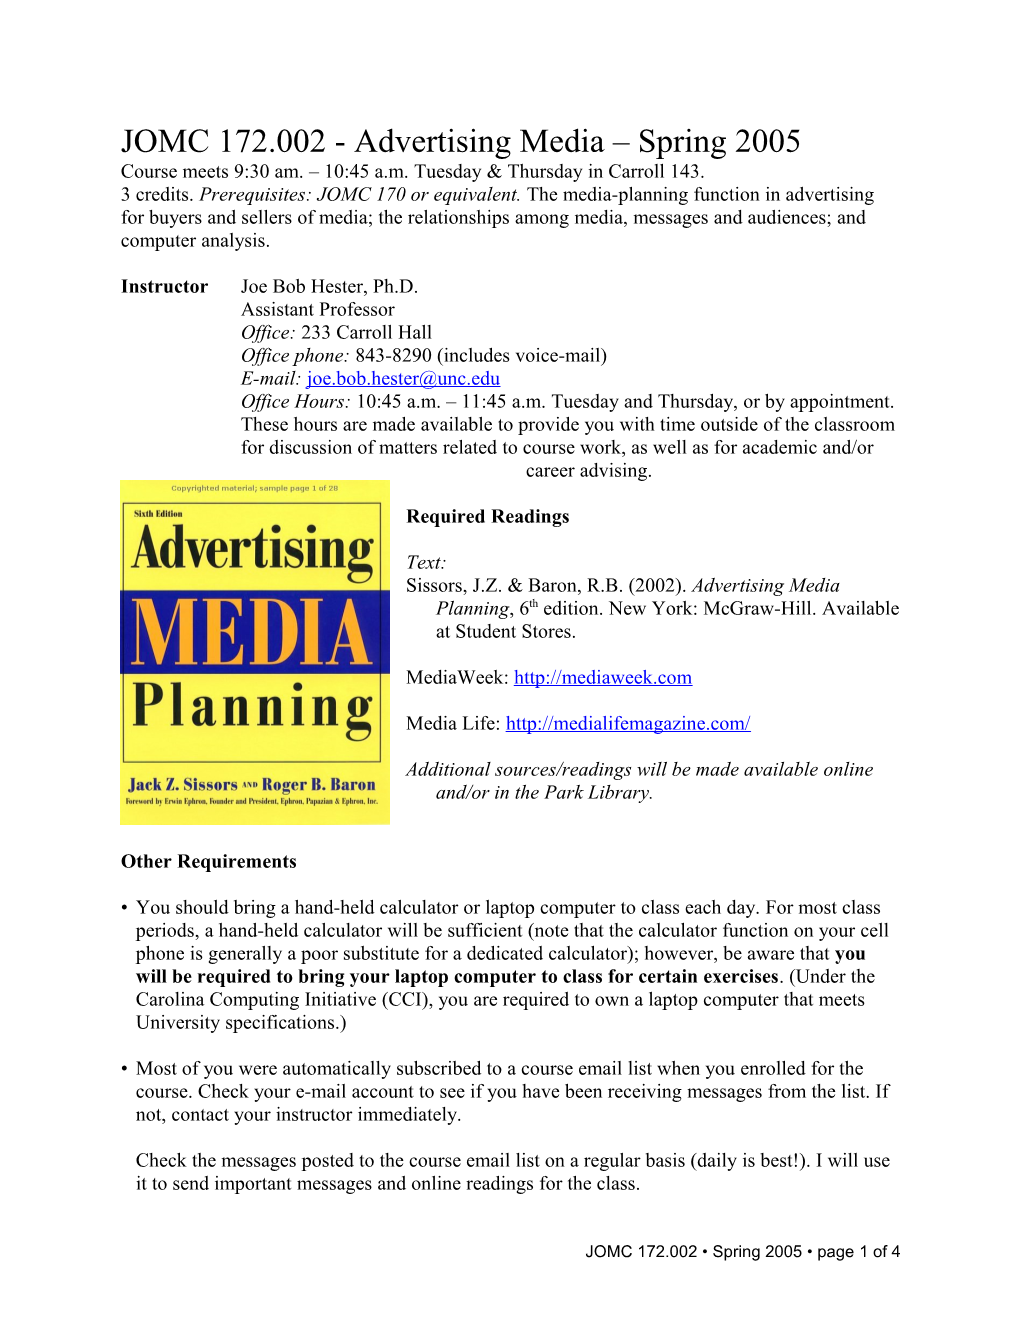 JOMC 172, Advertising Media